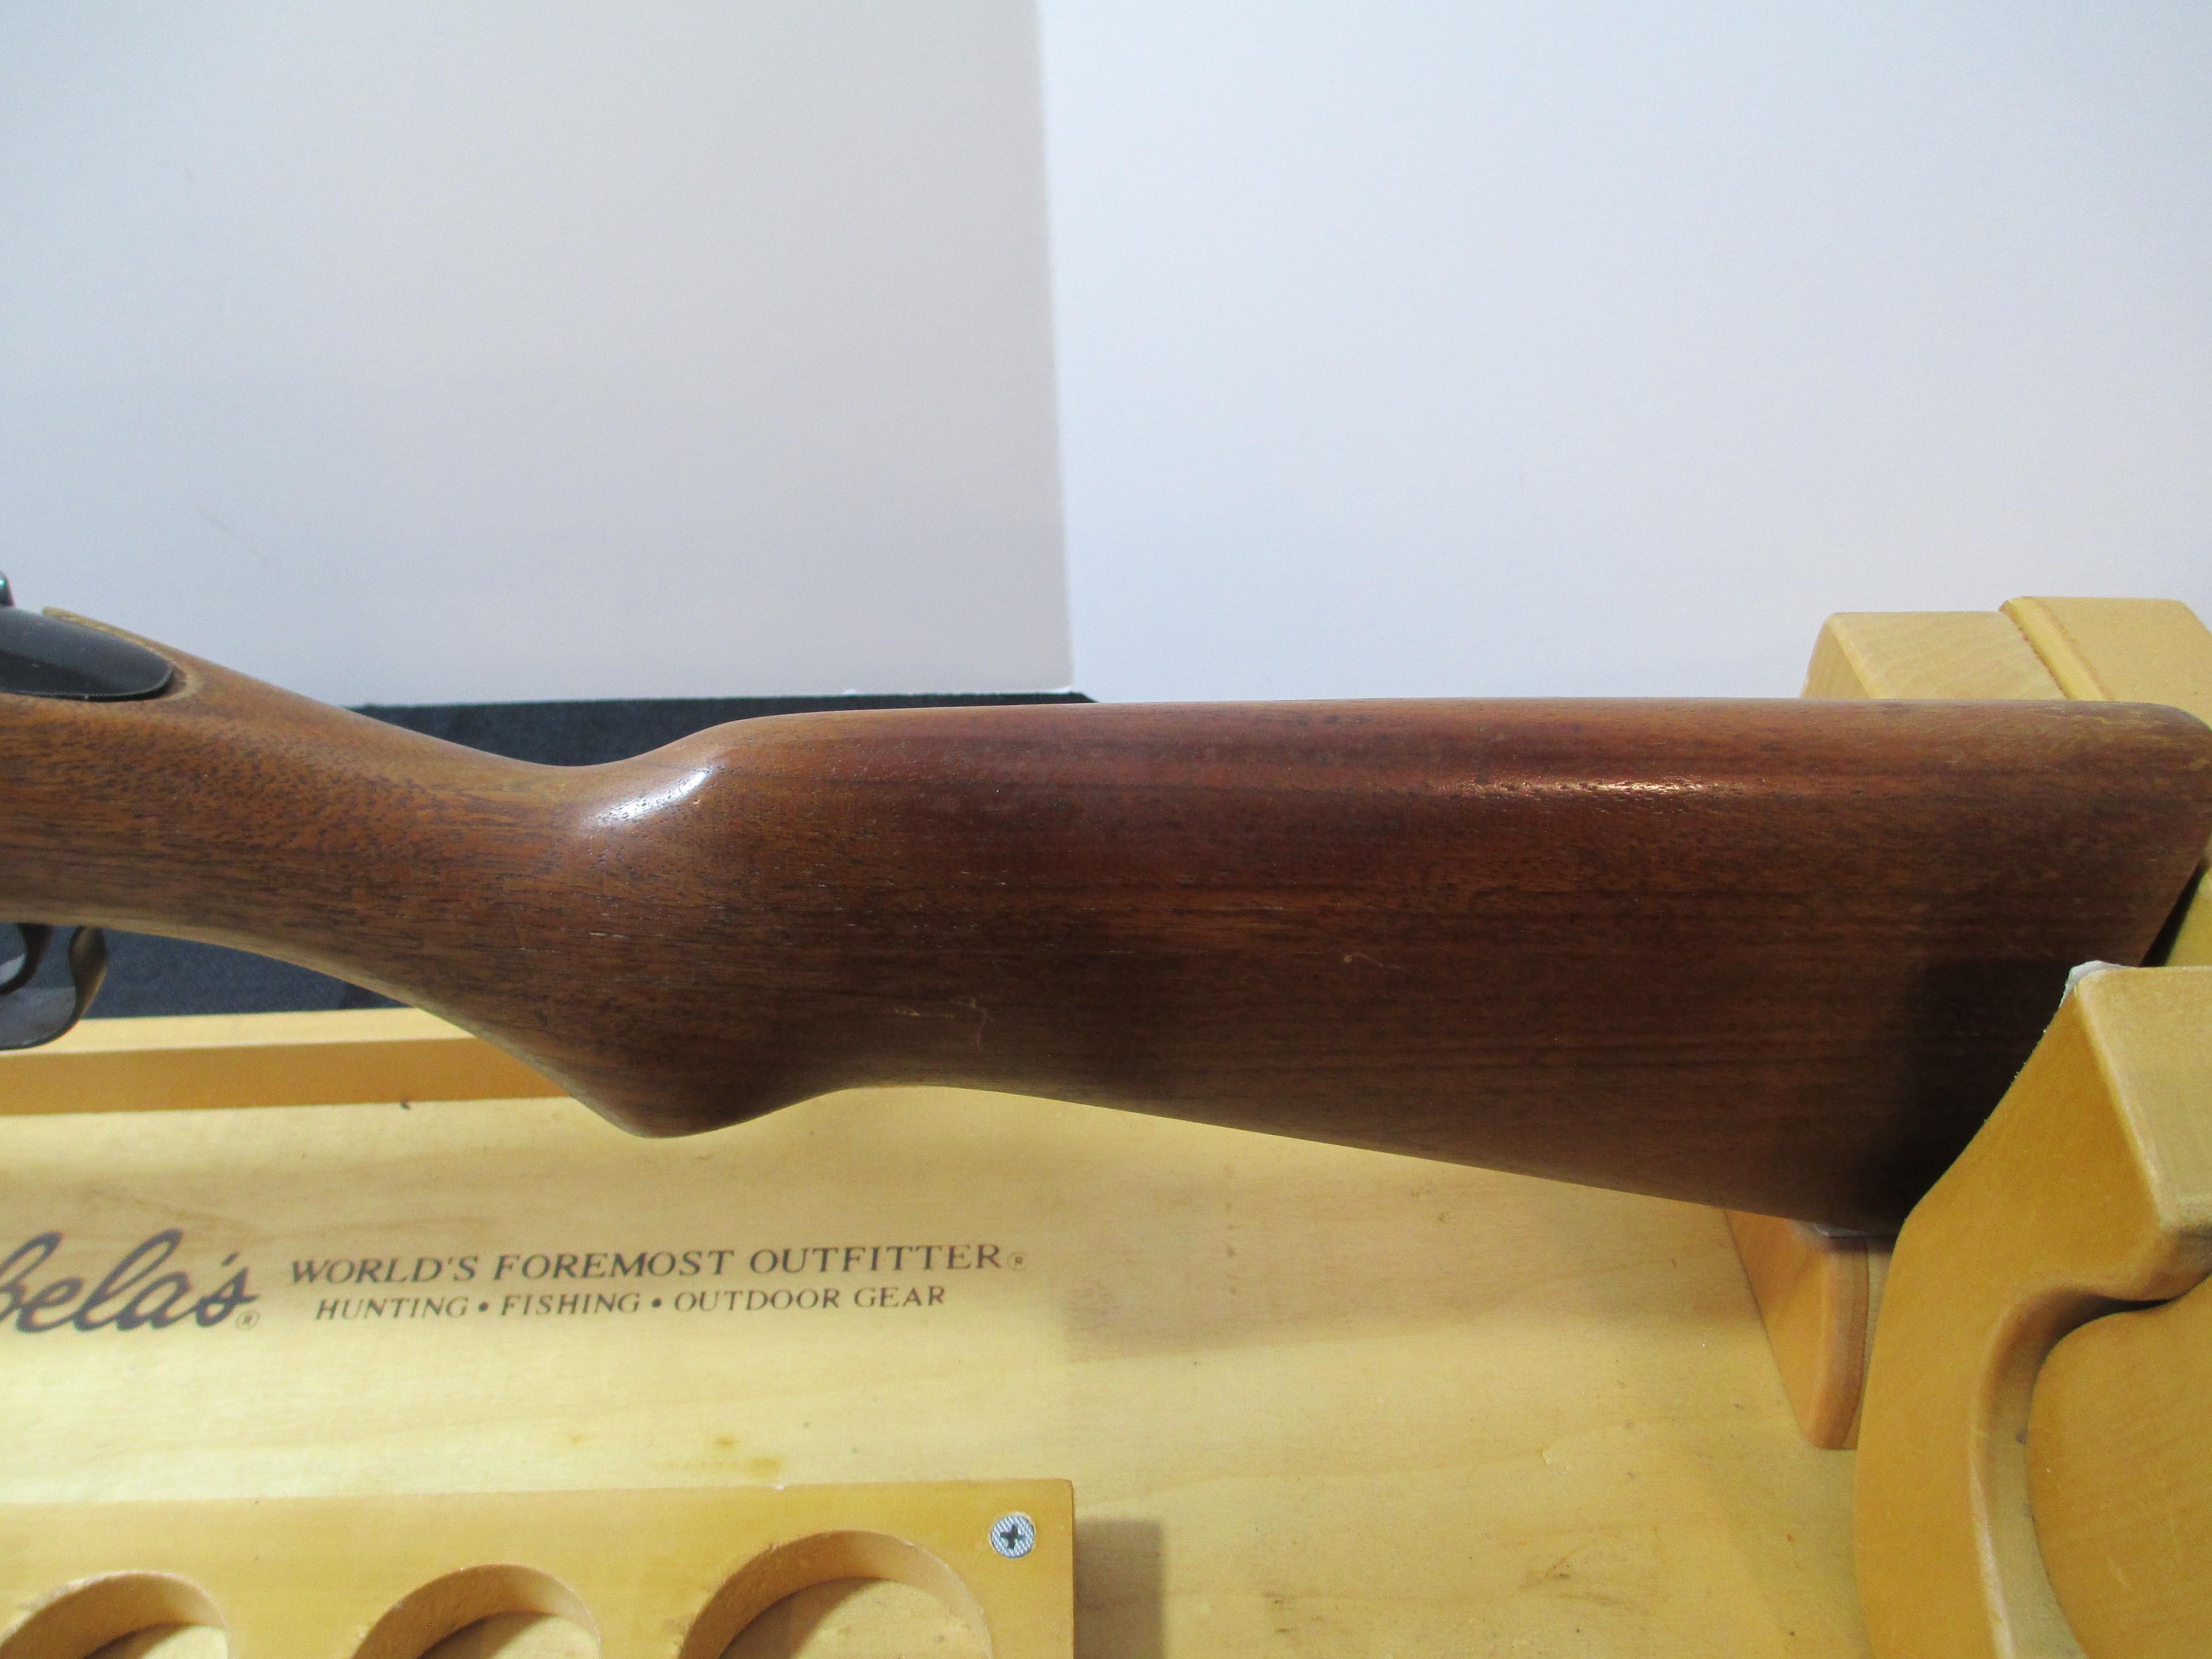 Sheridan Vintage Air Rifle 1984 "C Series" 5mm (.20 Cal.)